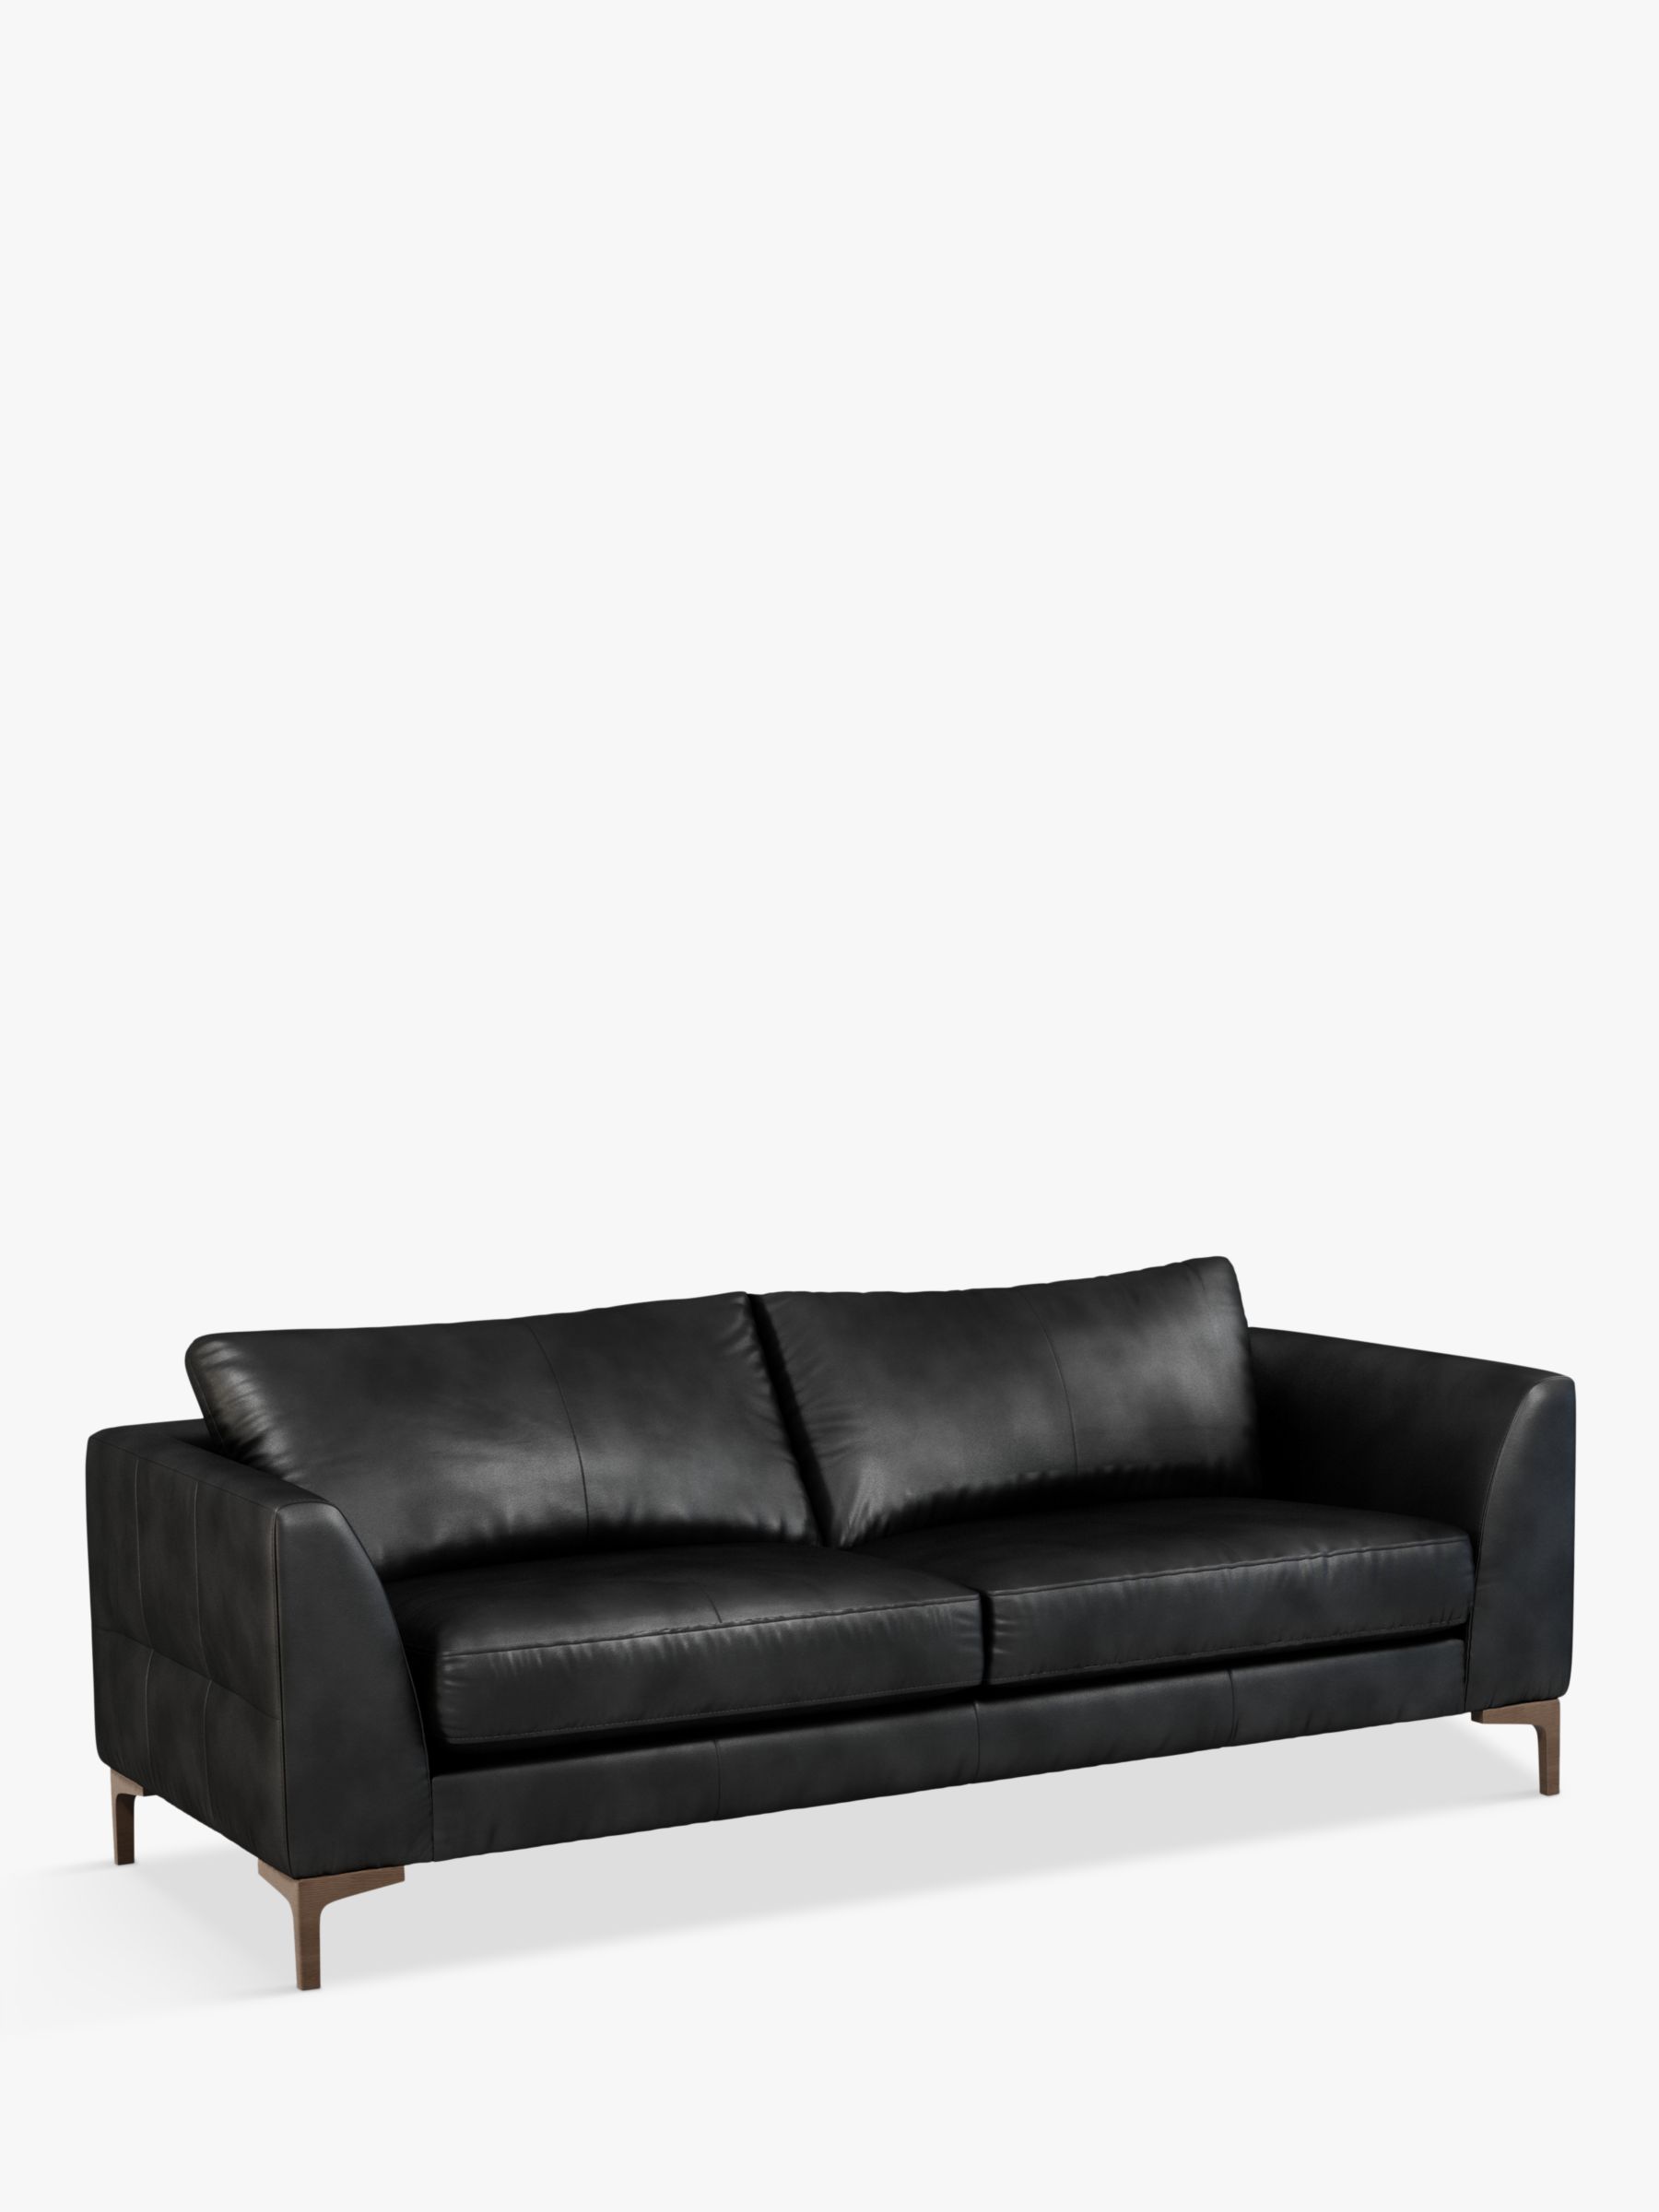 Belgrave Range, John Lewis Belgrave Grand 4 Seater Leather Sofa, Dark Leg, Contempo Black